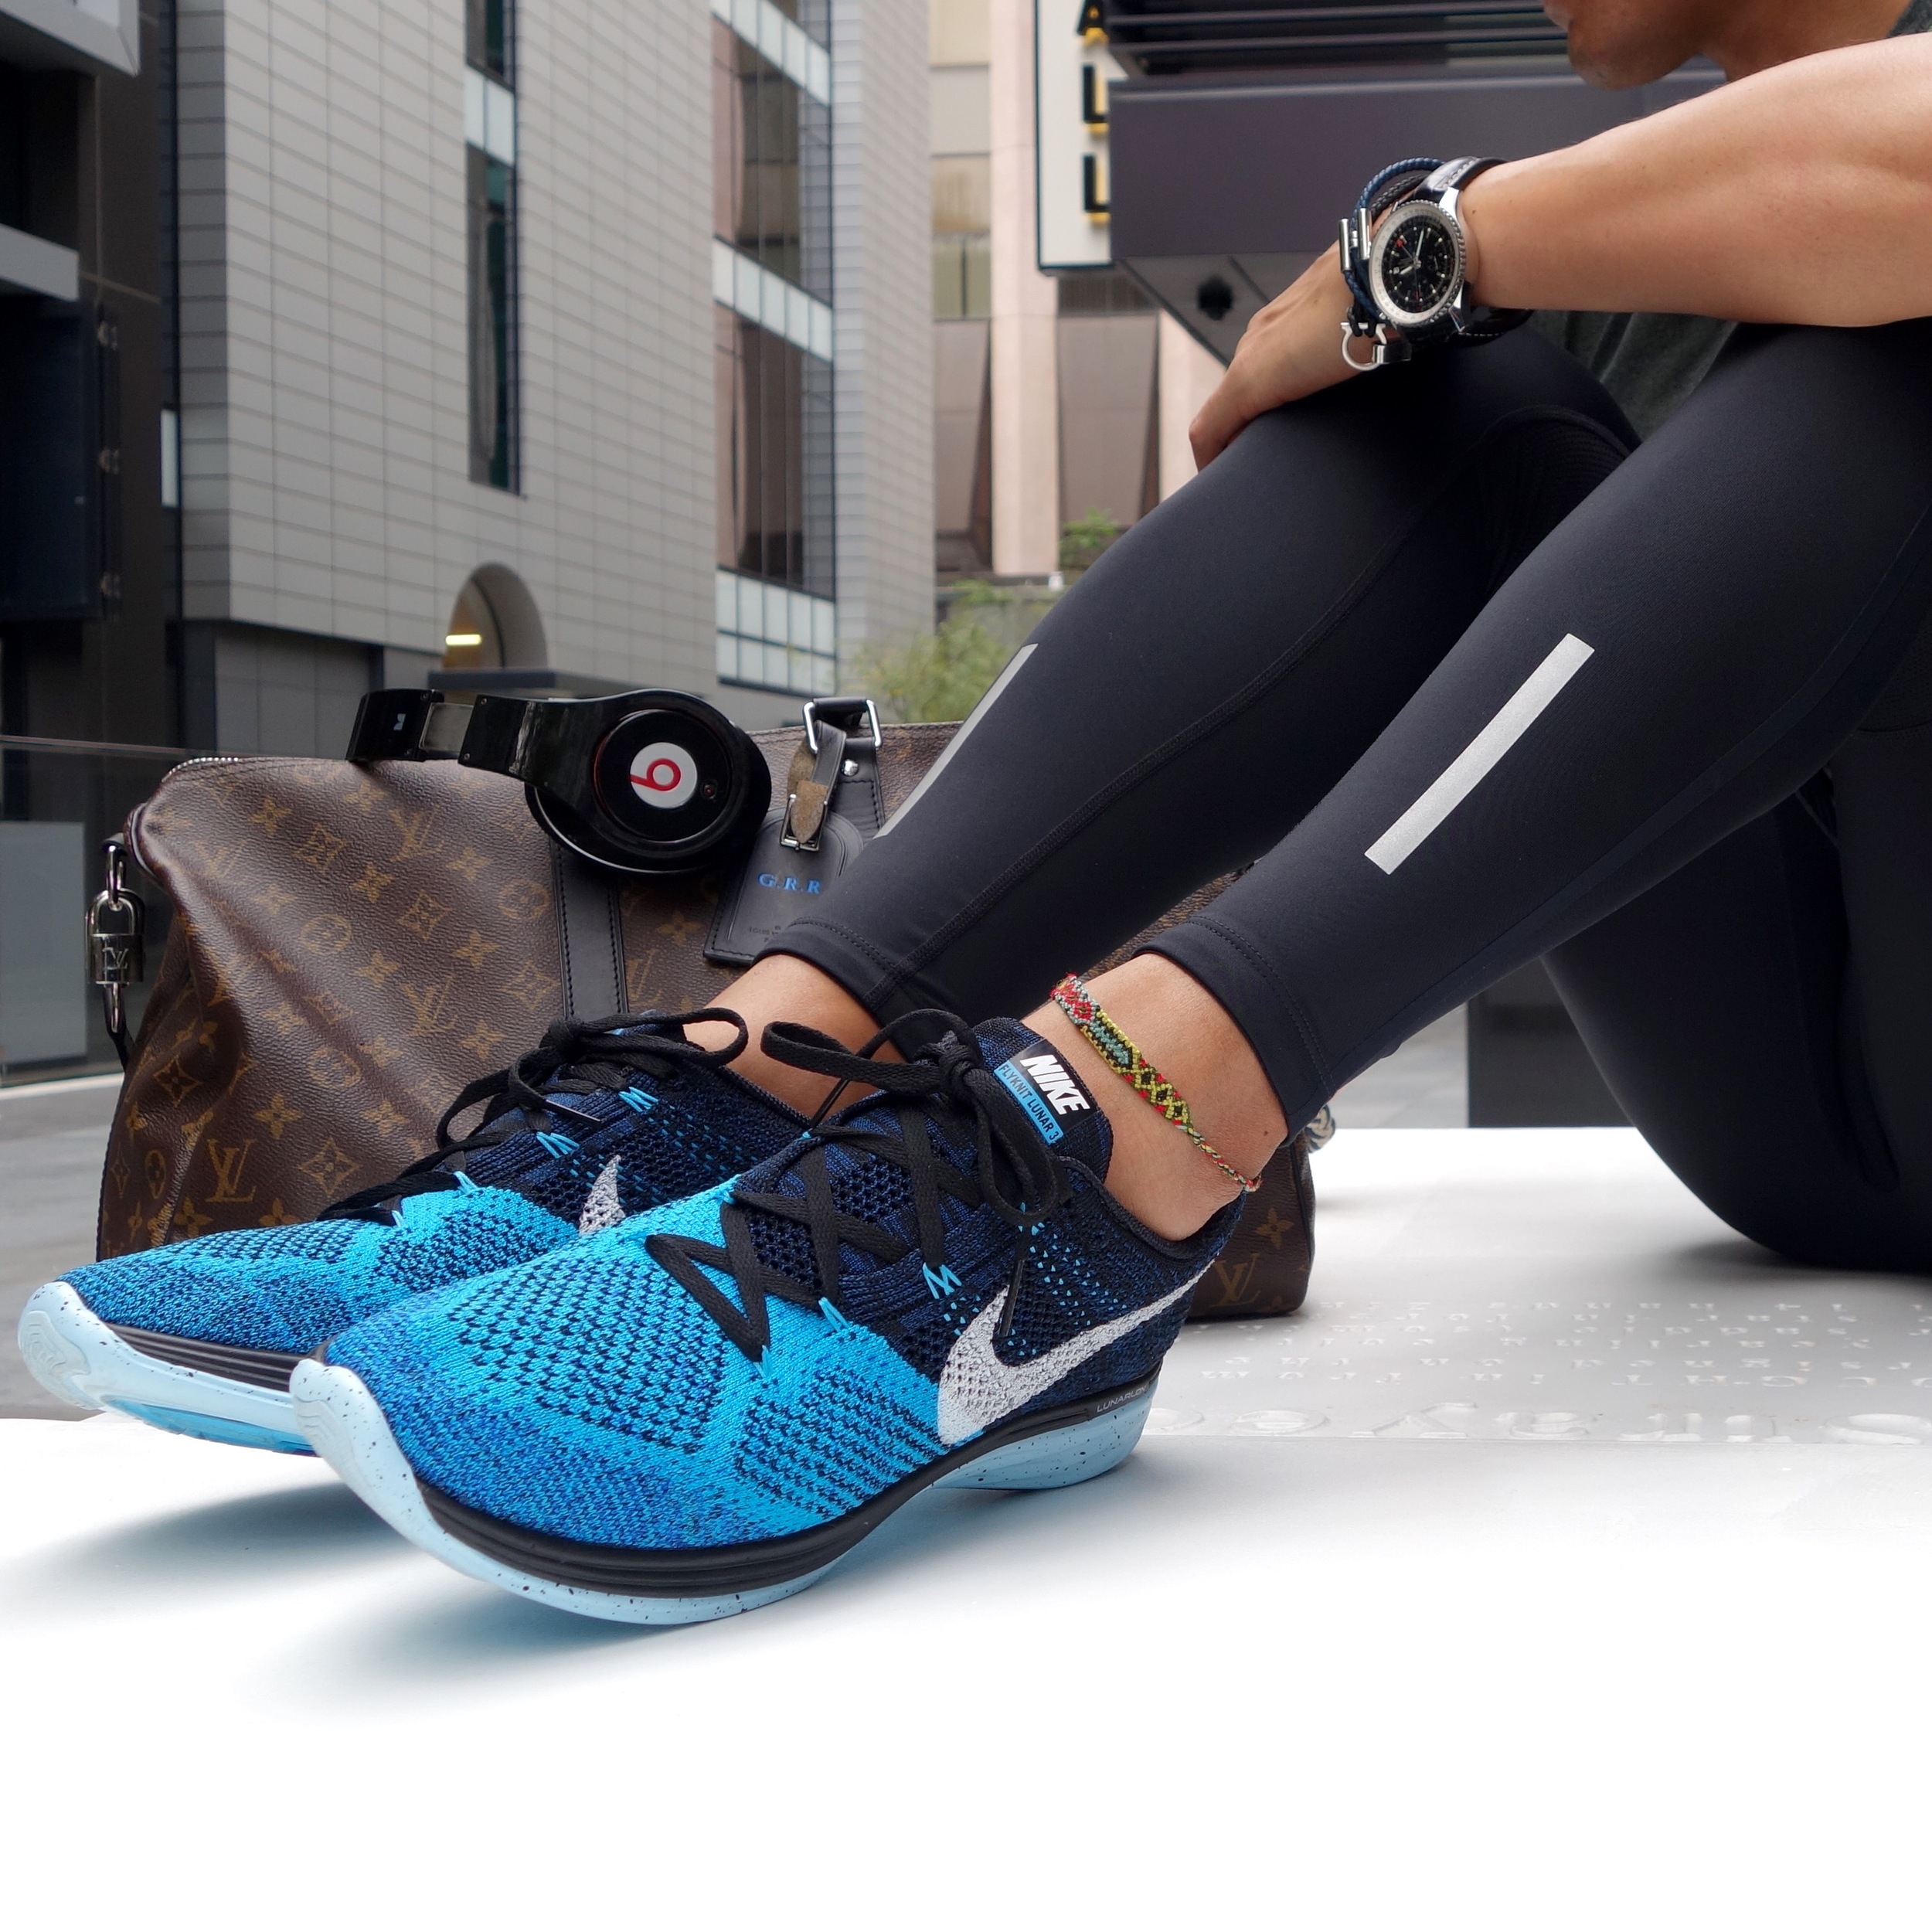 The Gym Shoe, Nike's Lunar 3 | Melbourne Menswear + Lifestyle